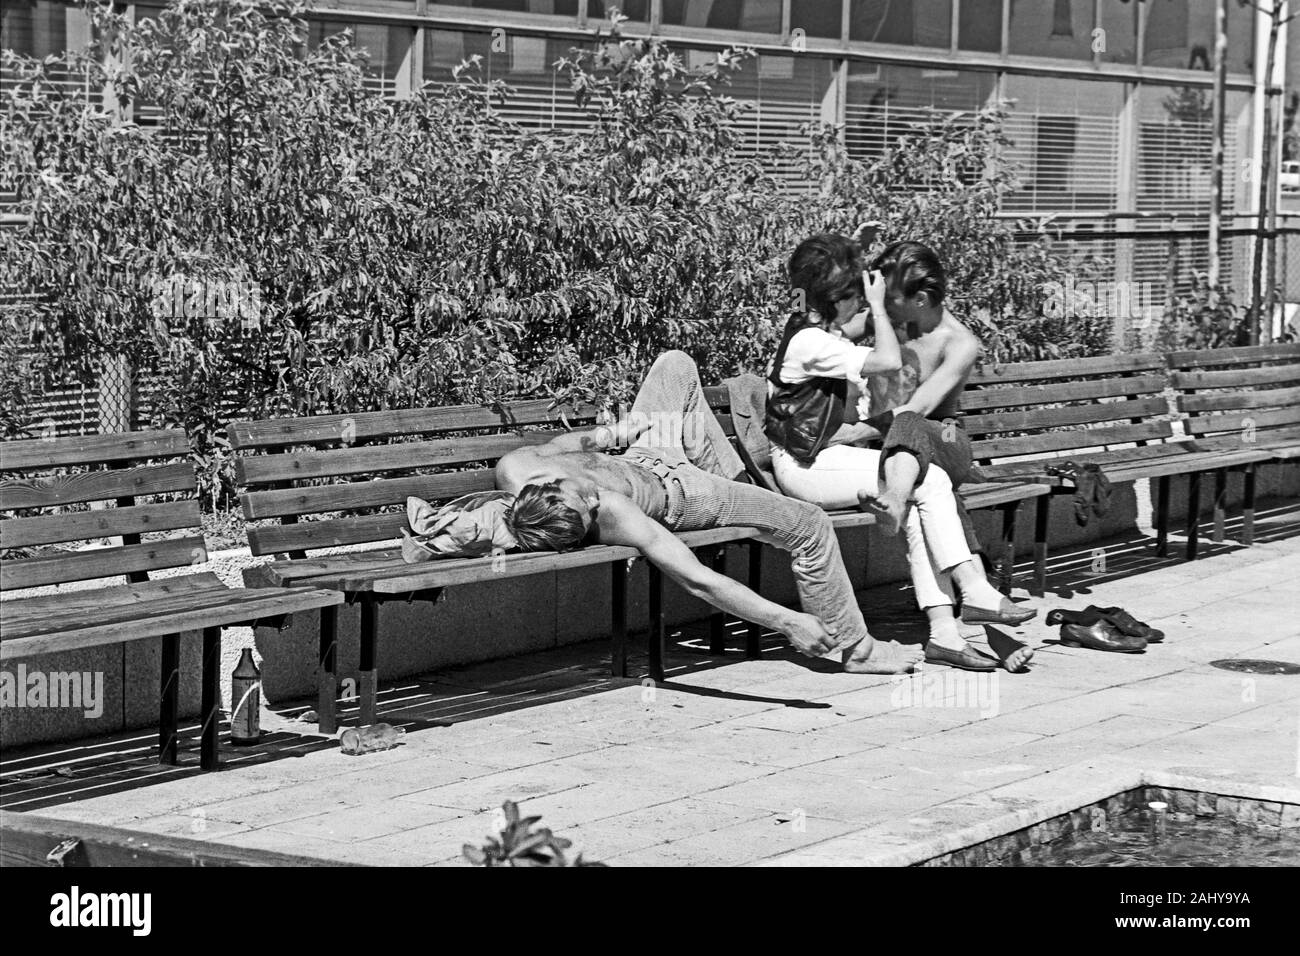 Idylle zwischen Stockholms Hochhäusern, 1969. Idyllic scenes amidst Stockholm's towers, 1969. Stock Photo